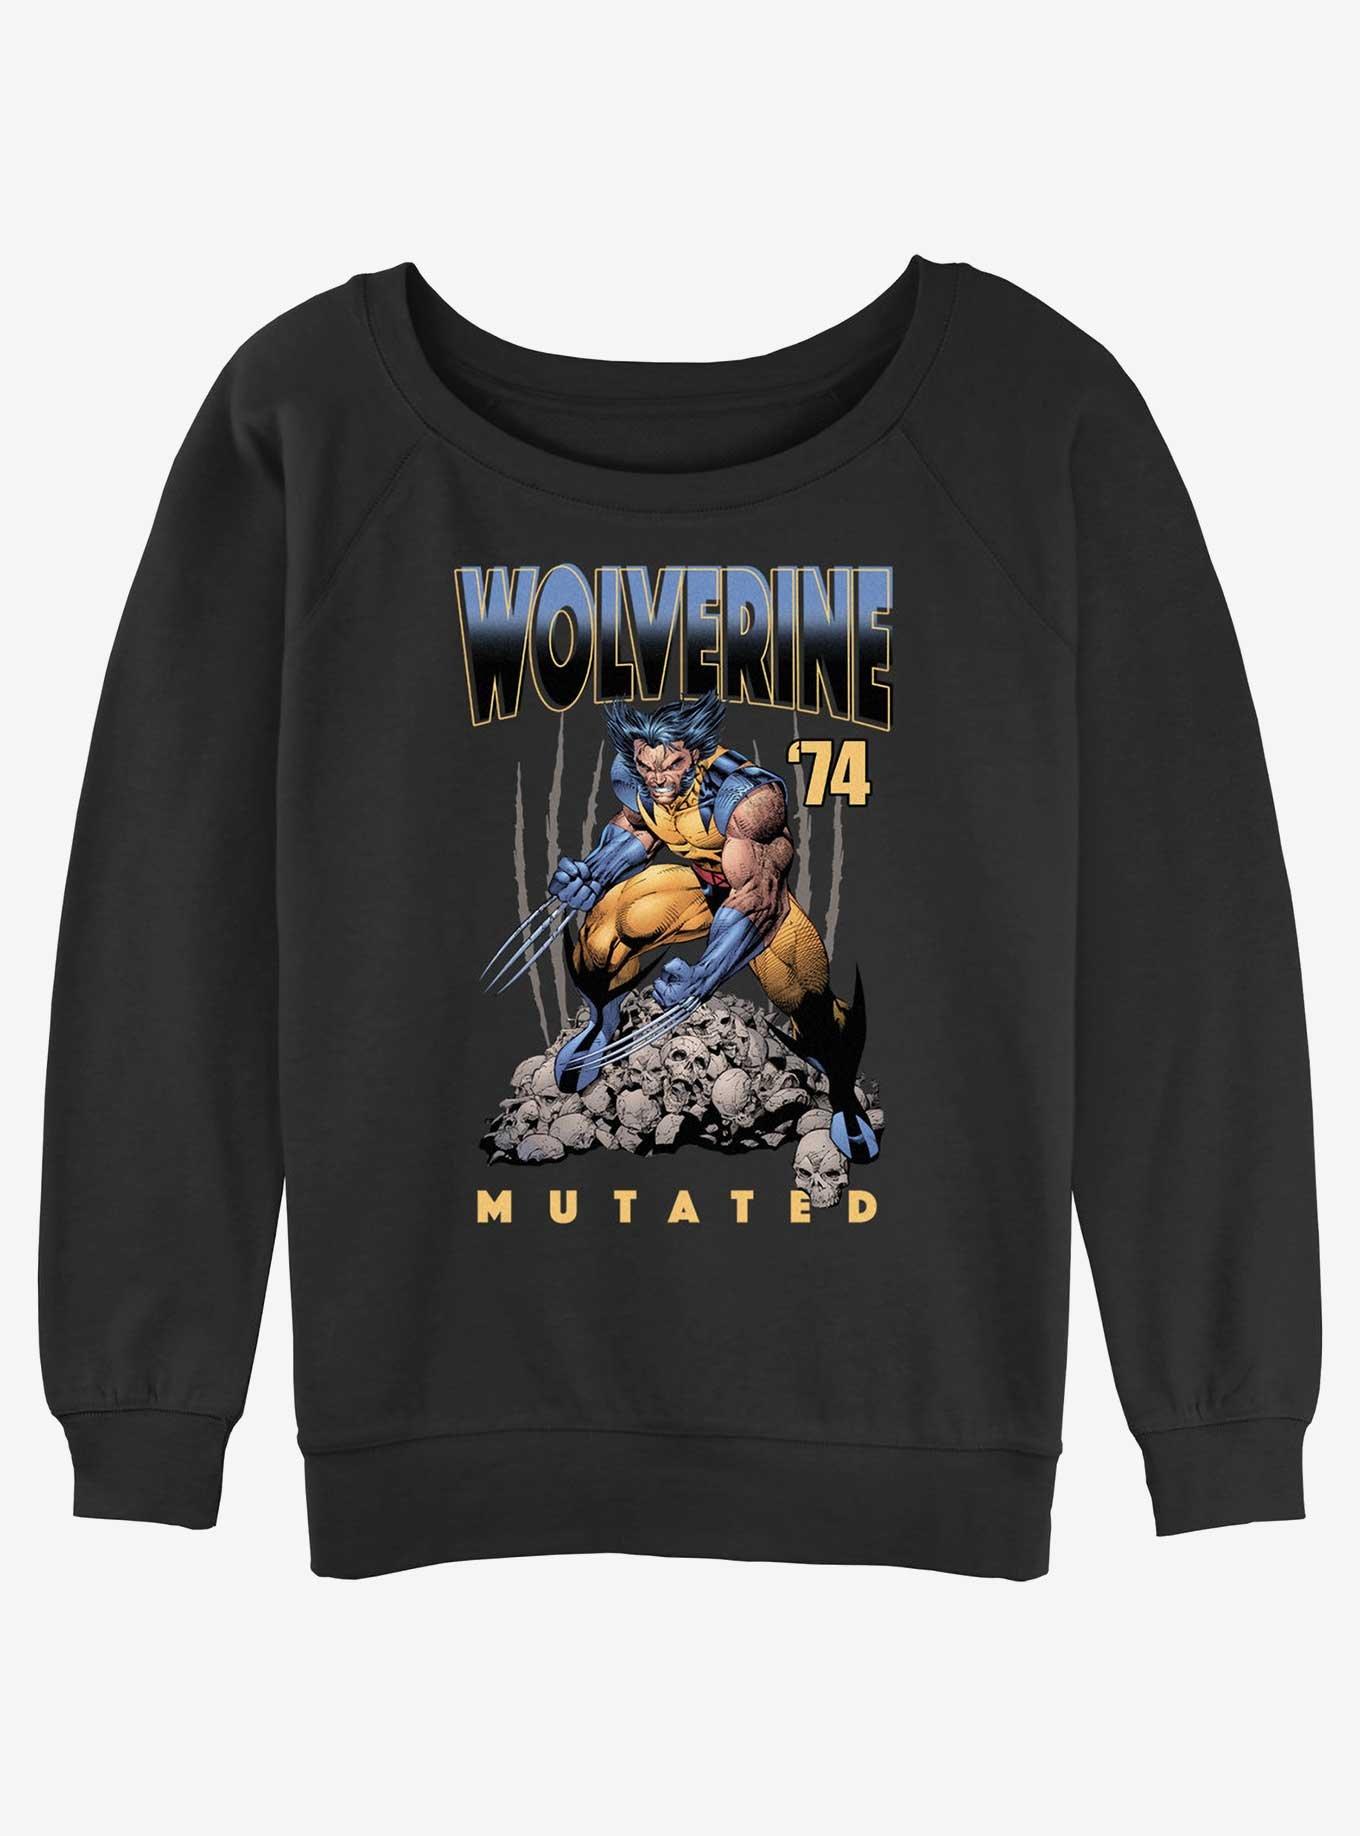 Wolverine Mutated Womens Slouchy Sweatshirt, BLACK, hi-res